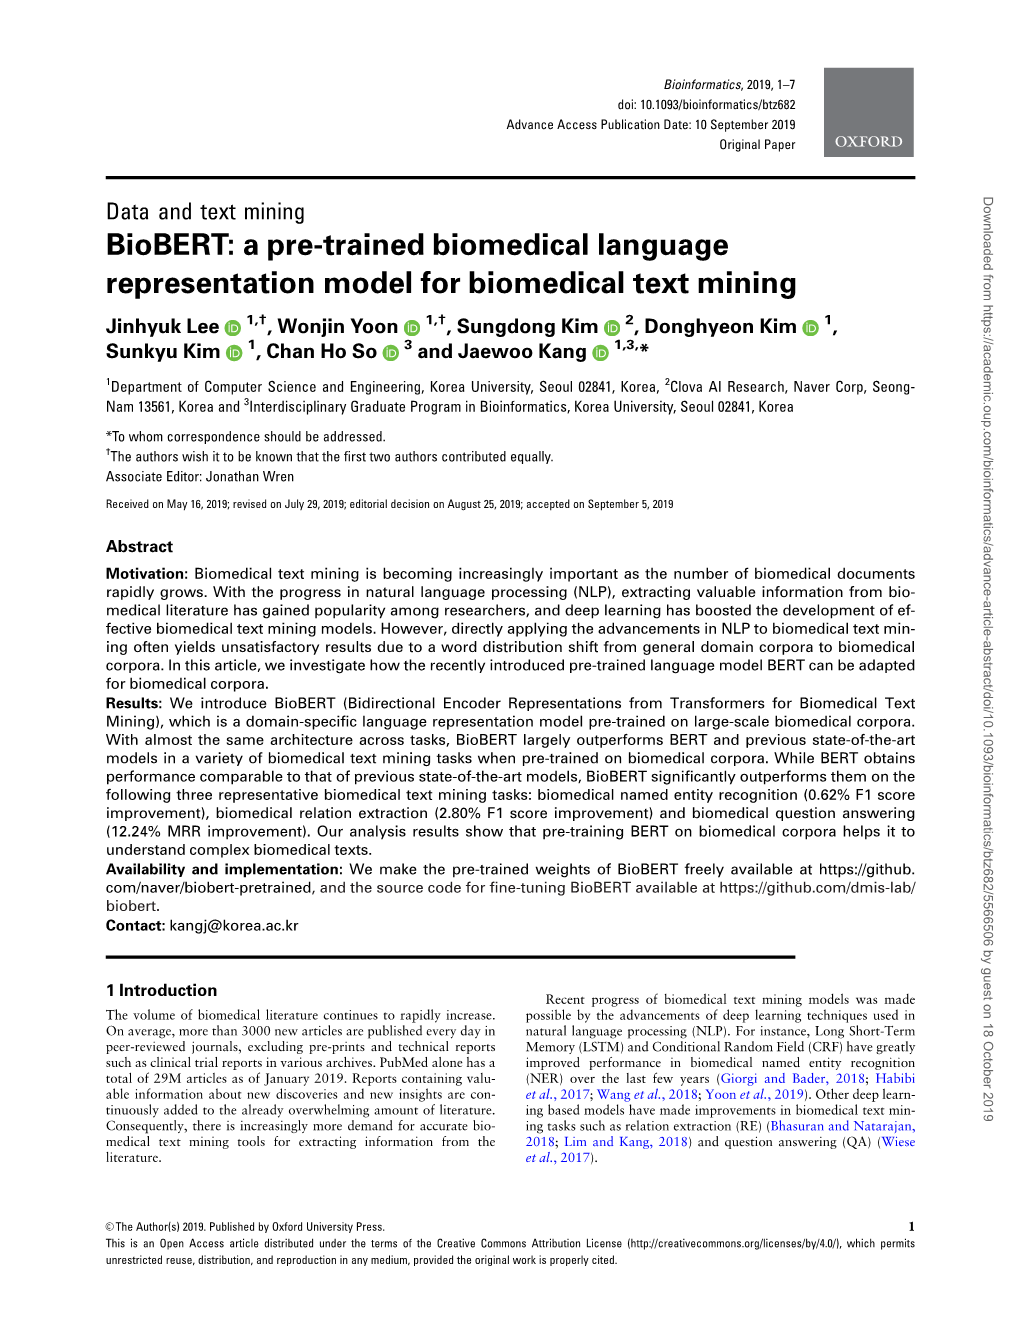 Biobert: a Pre-Trained Biomedical Language Representation Model For